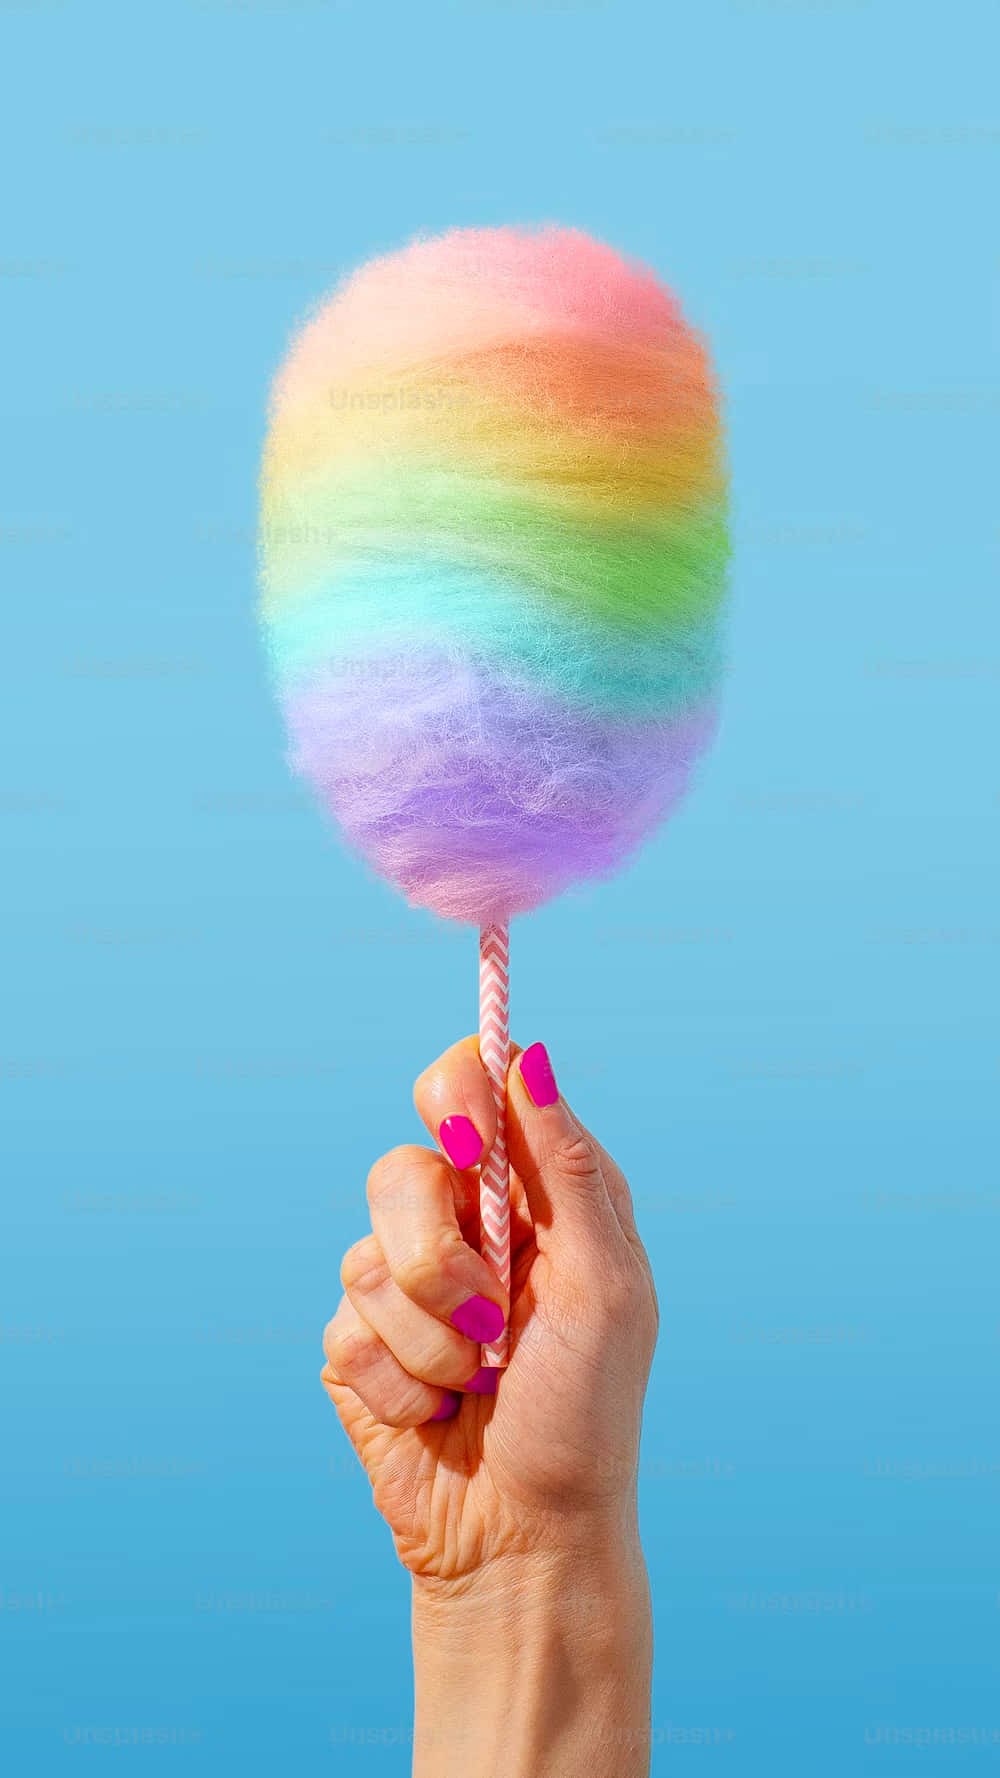 Rainbow Cotton Candy Pride Celebration.jpg Background